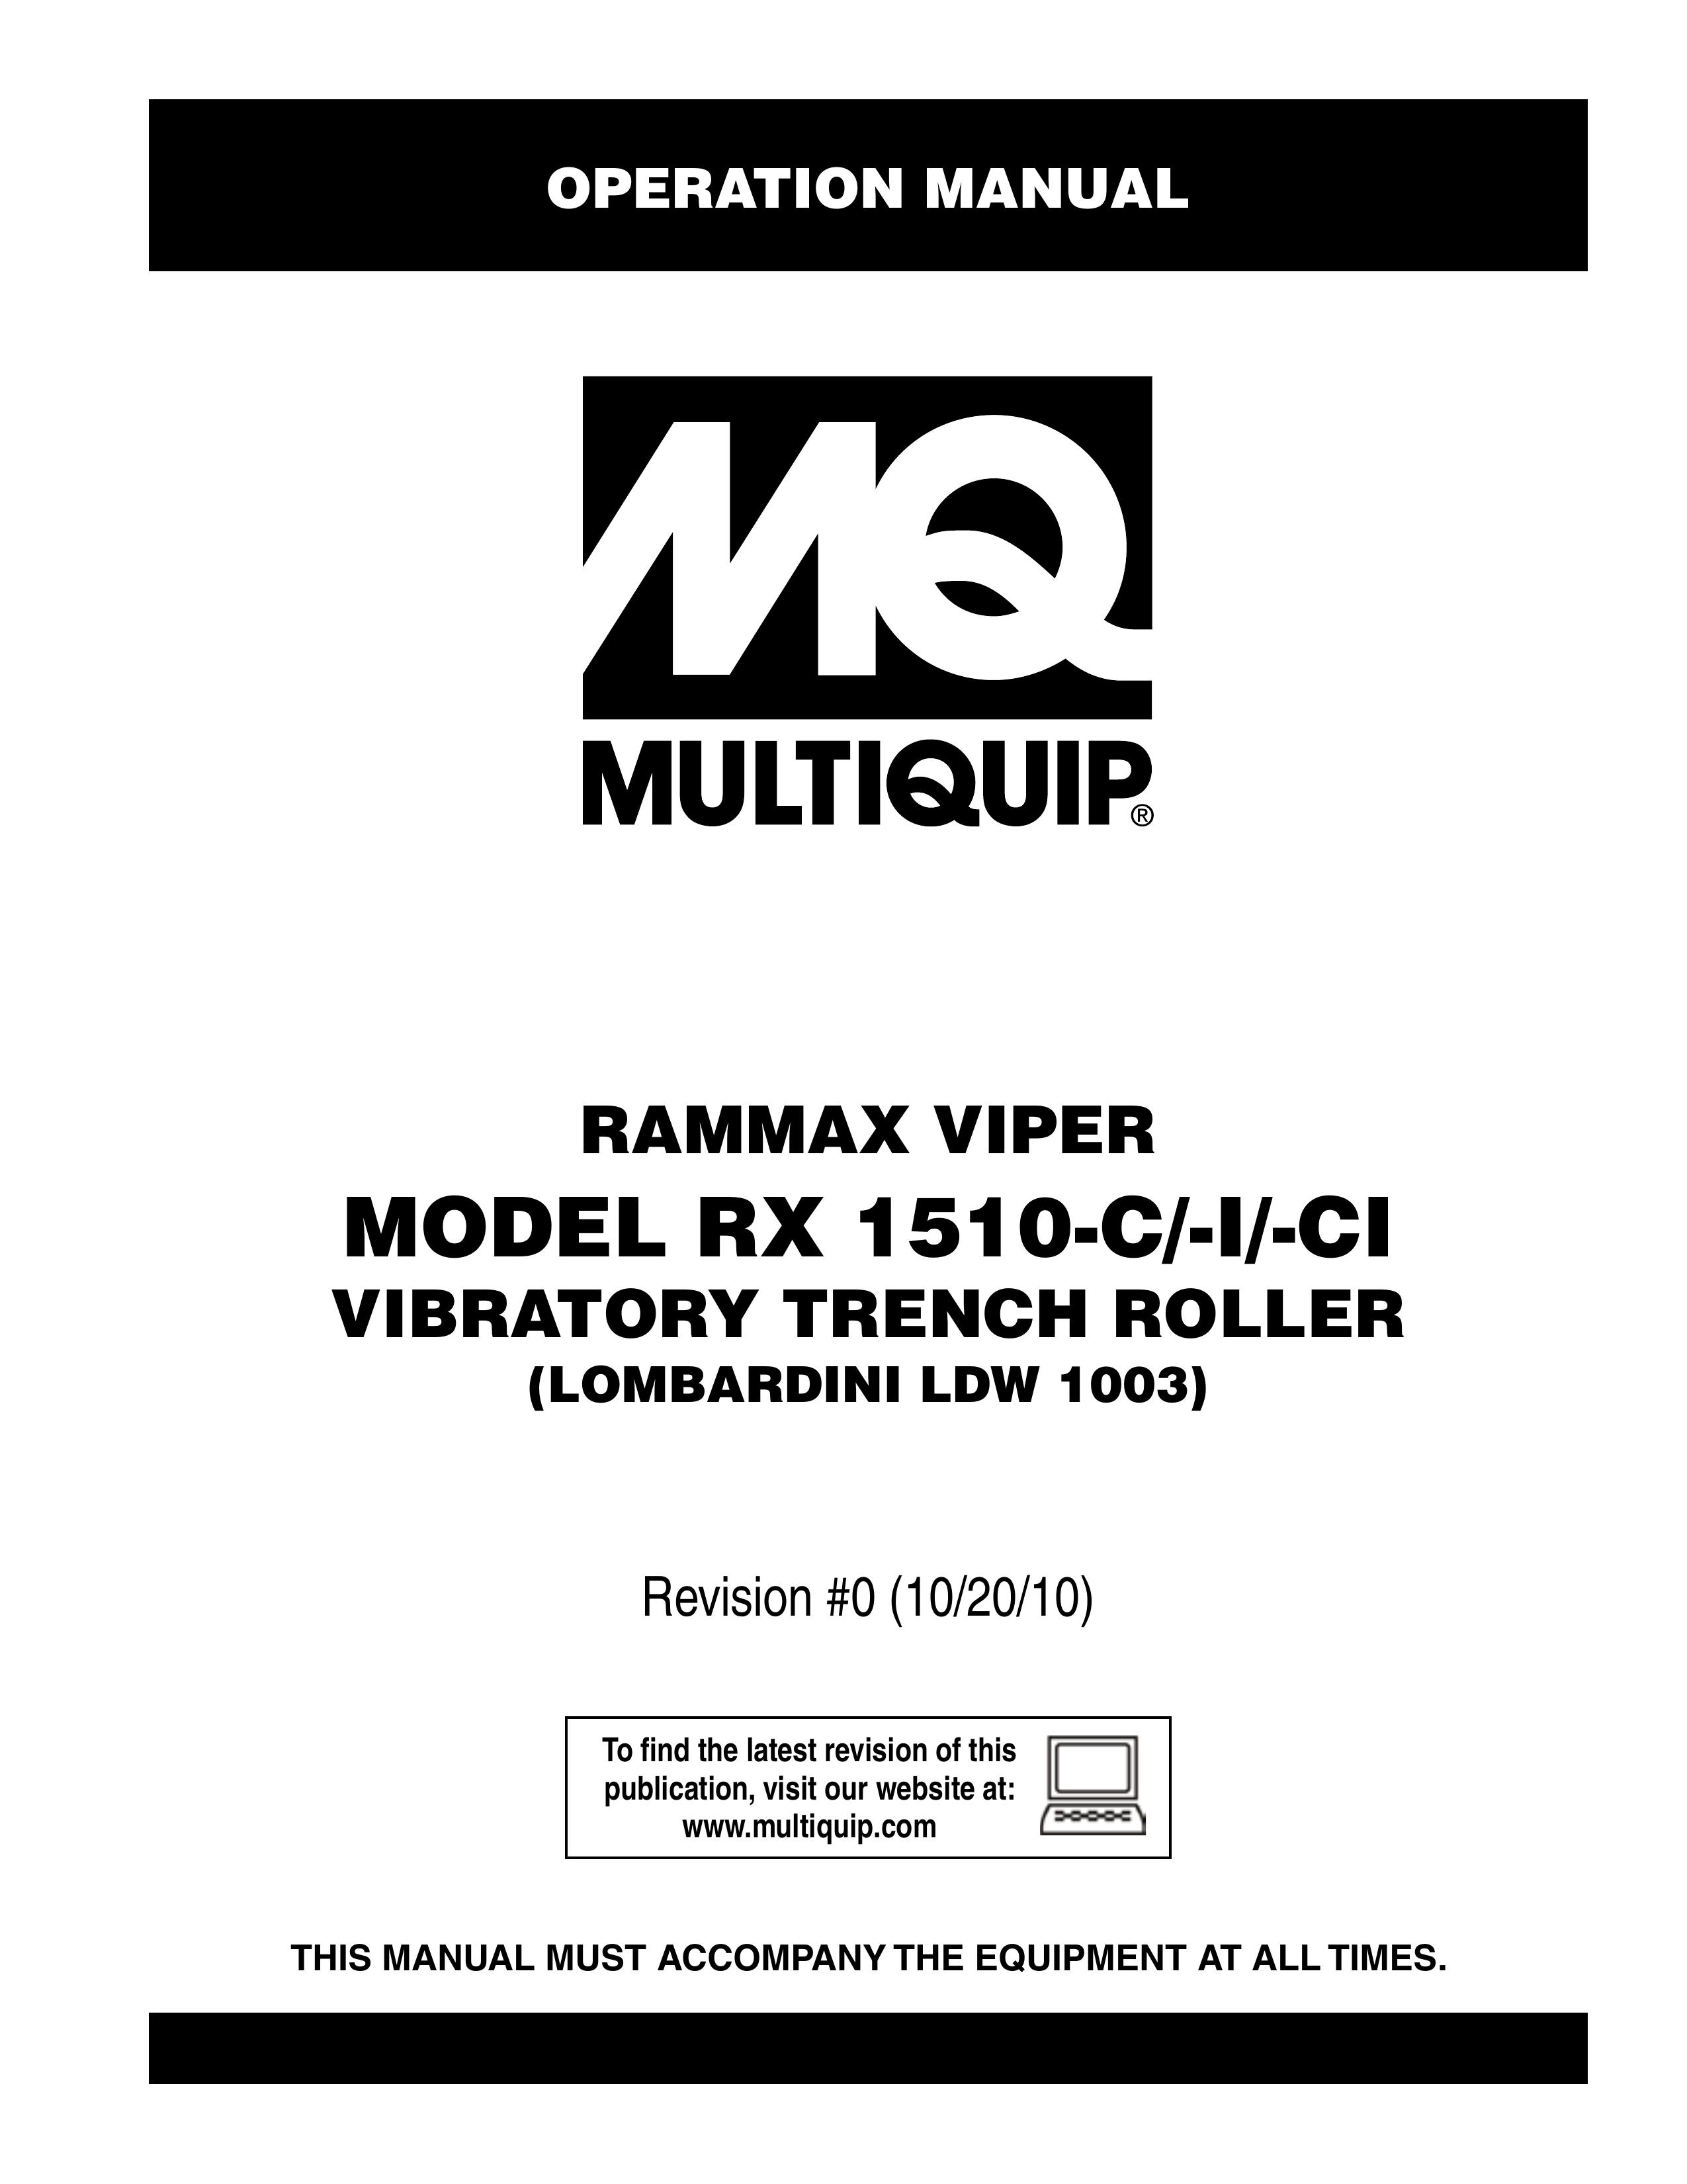 Multiquip RX 1510-C/-I/-CI Hair Care Product User Manual